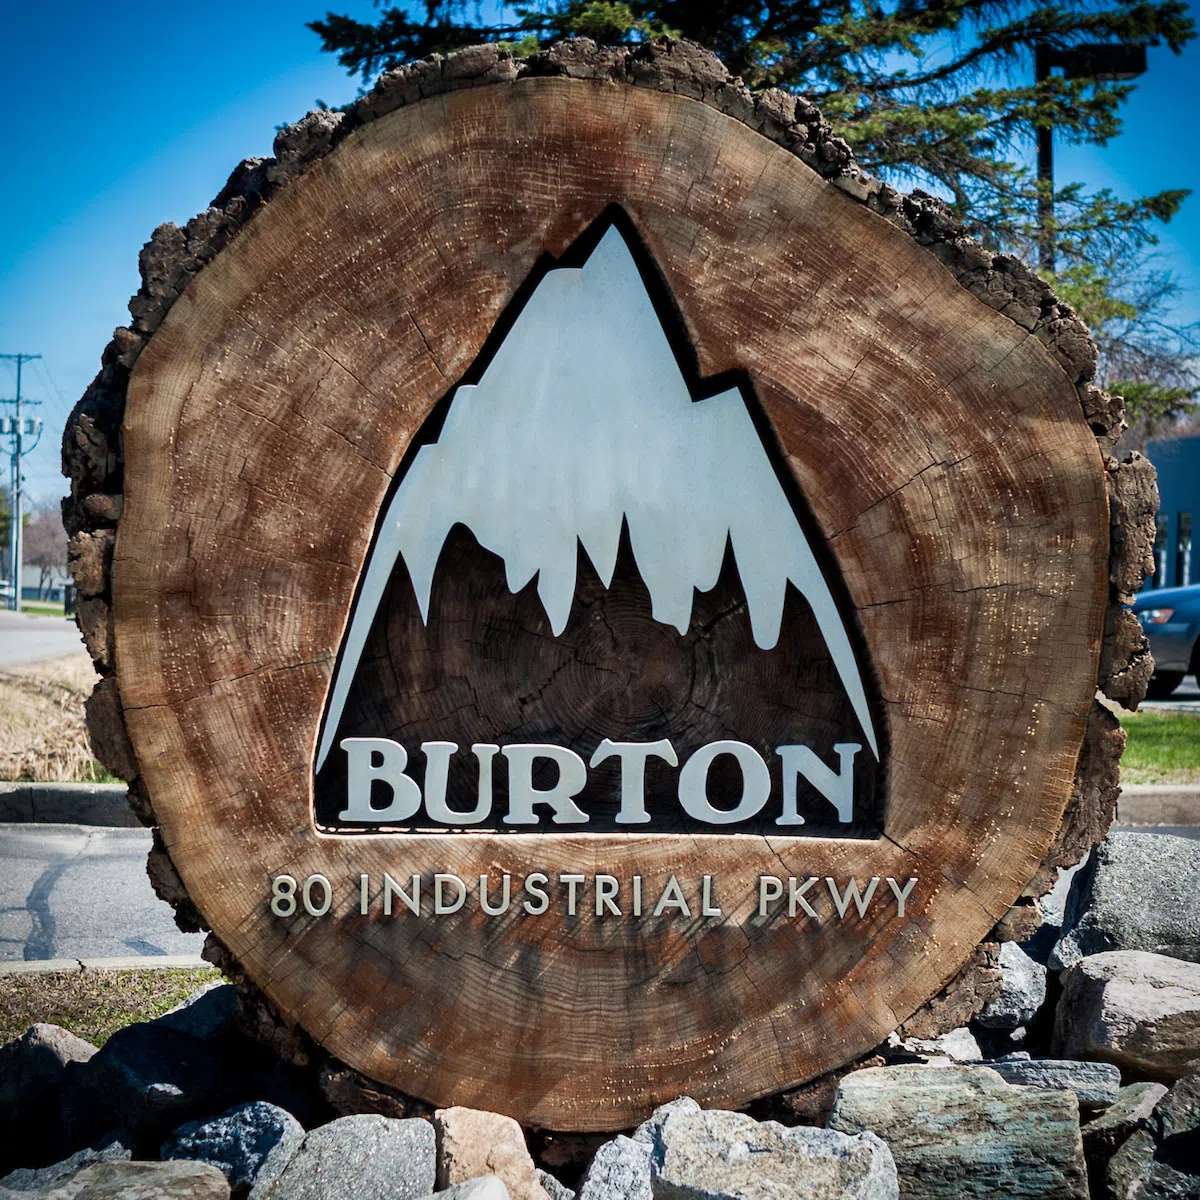 Burton Snowboard's business sign.